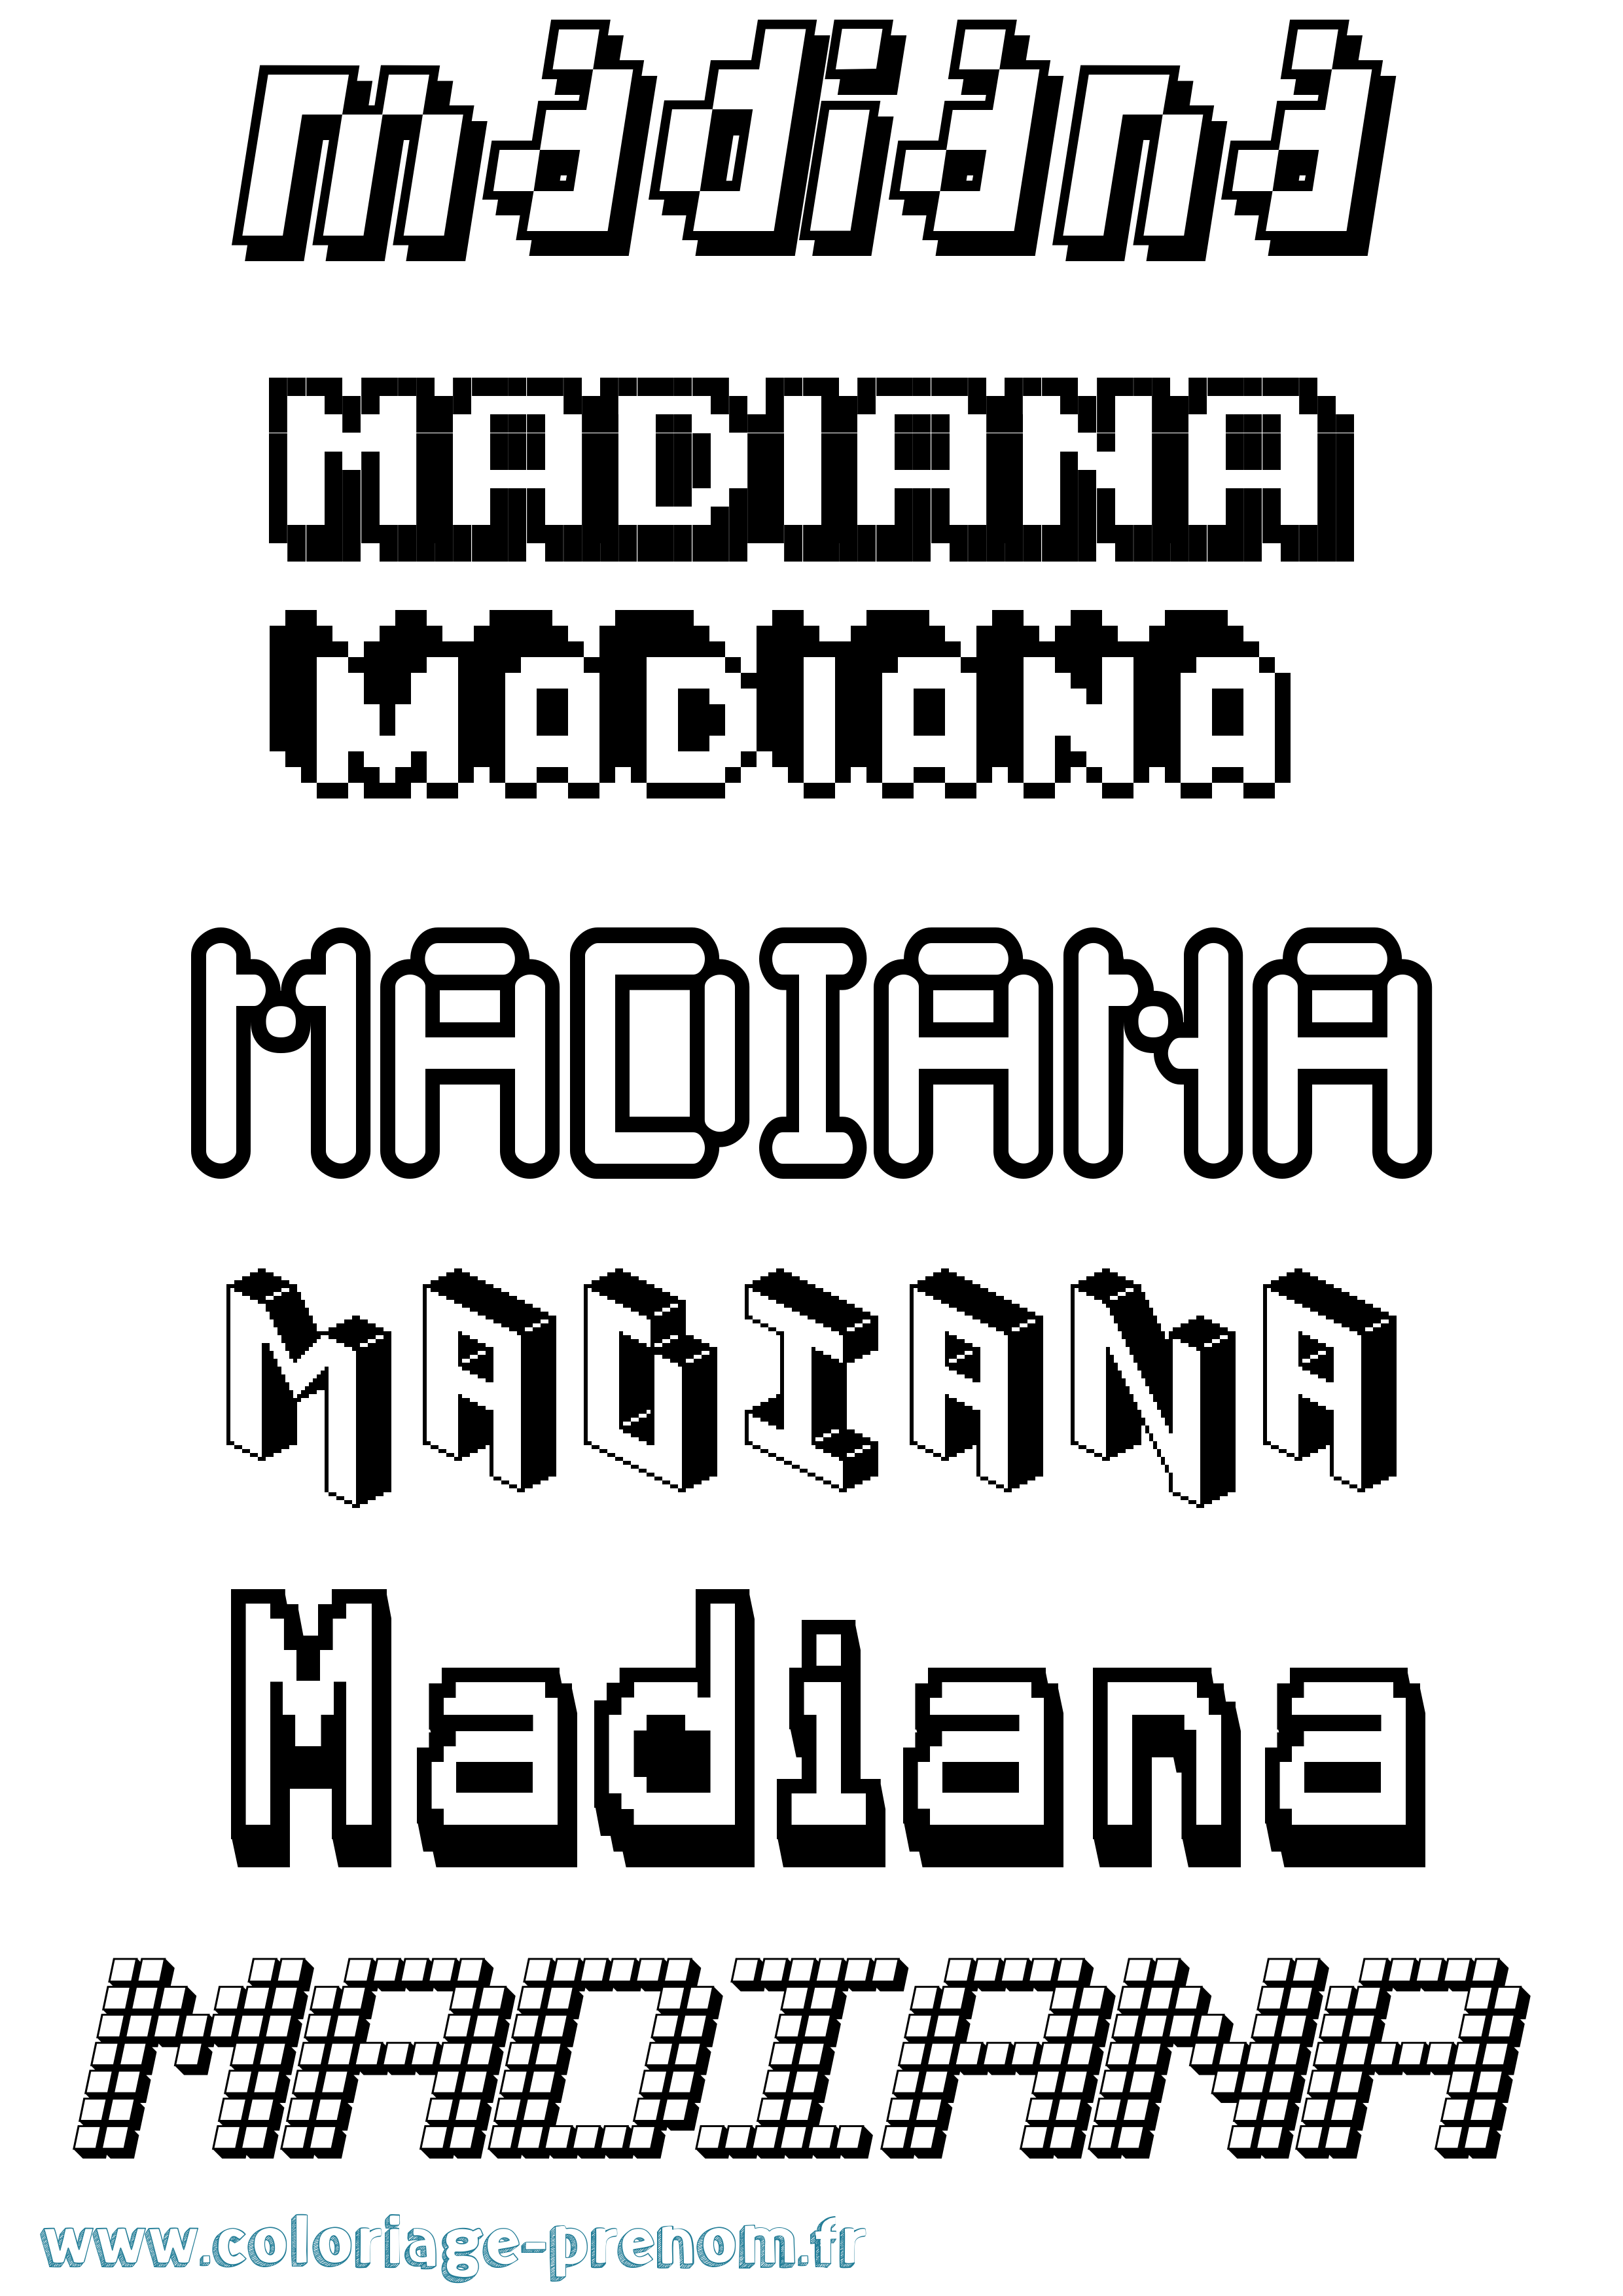 Coloriage prénom Madiana Pixel